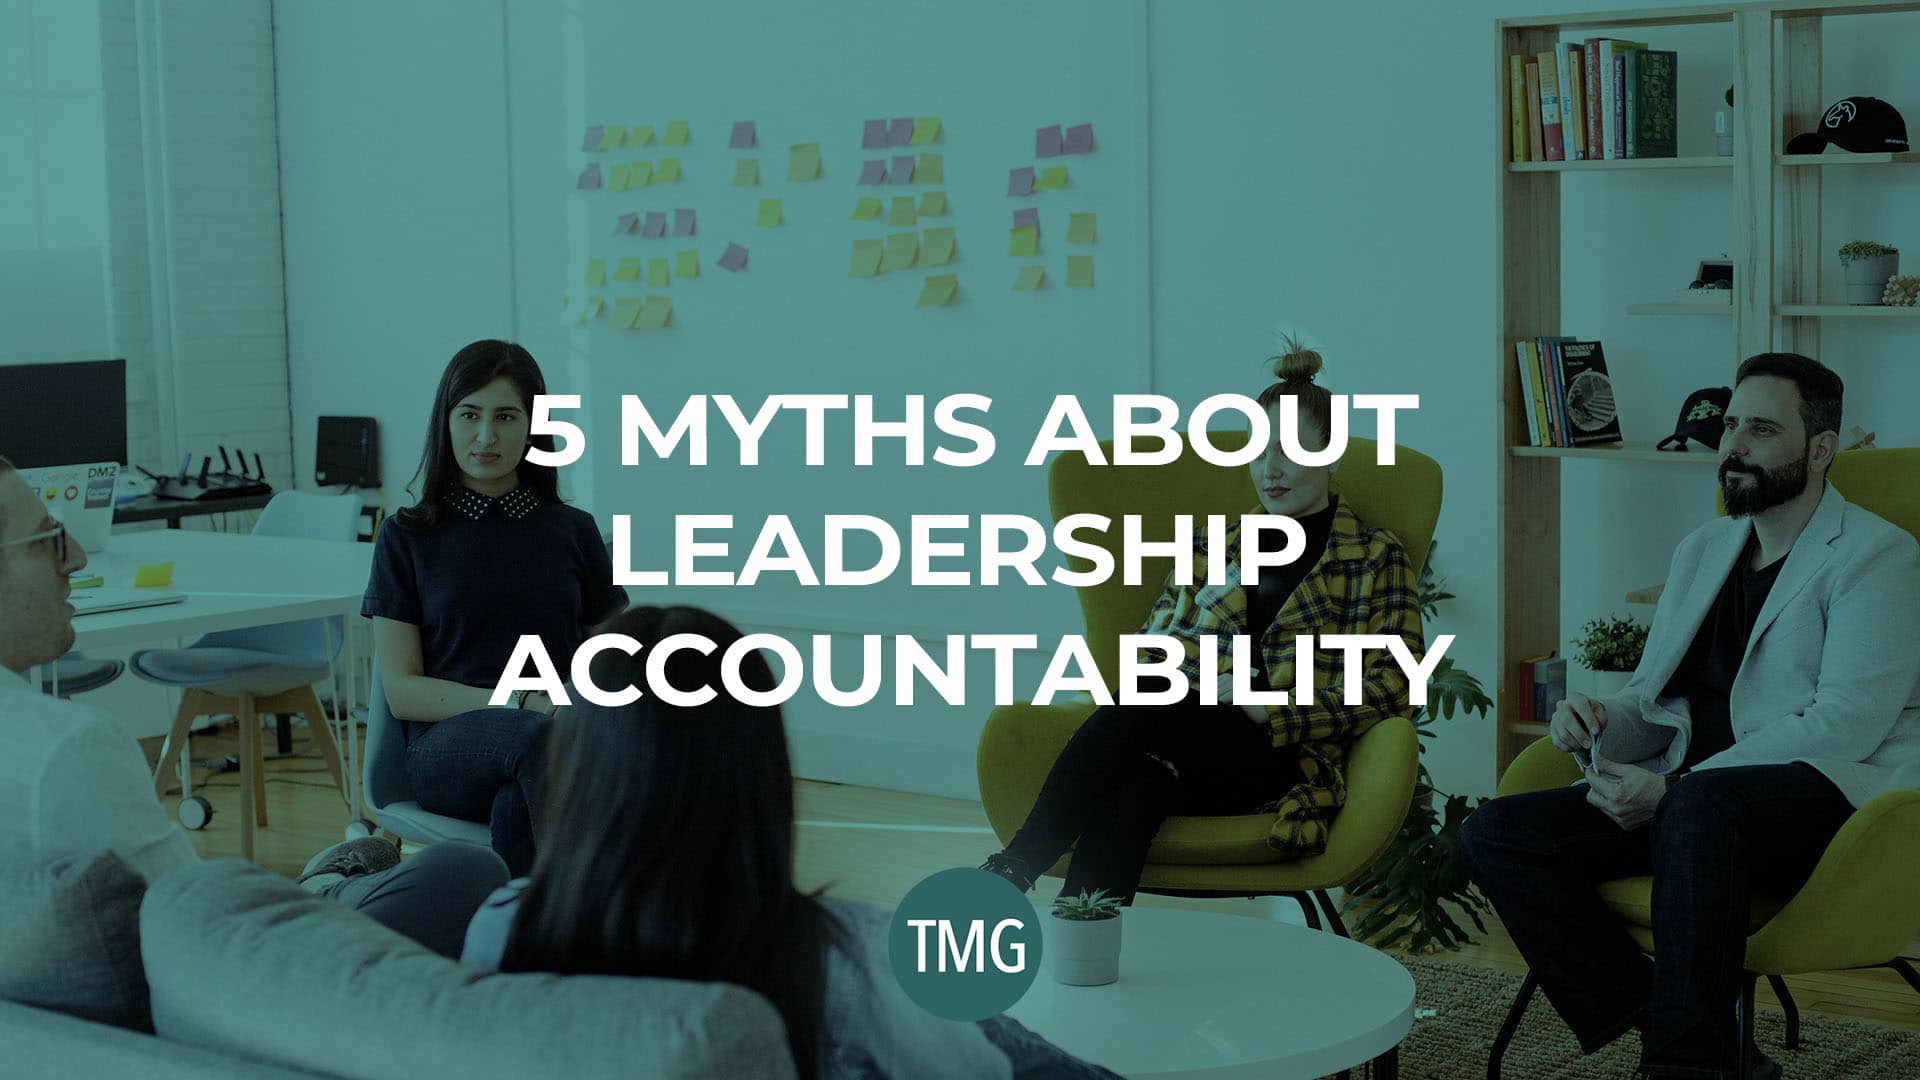 5-myths-about-leadership-accountability-header-image